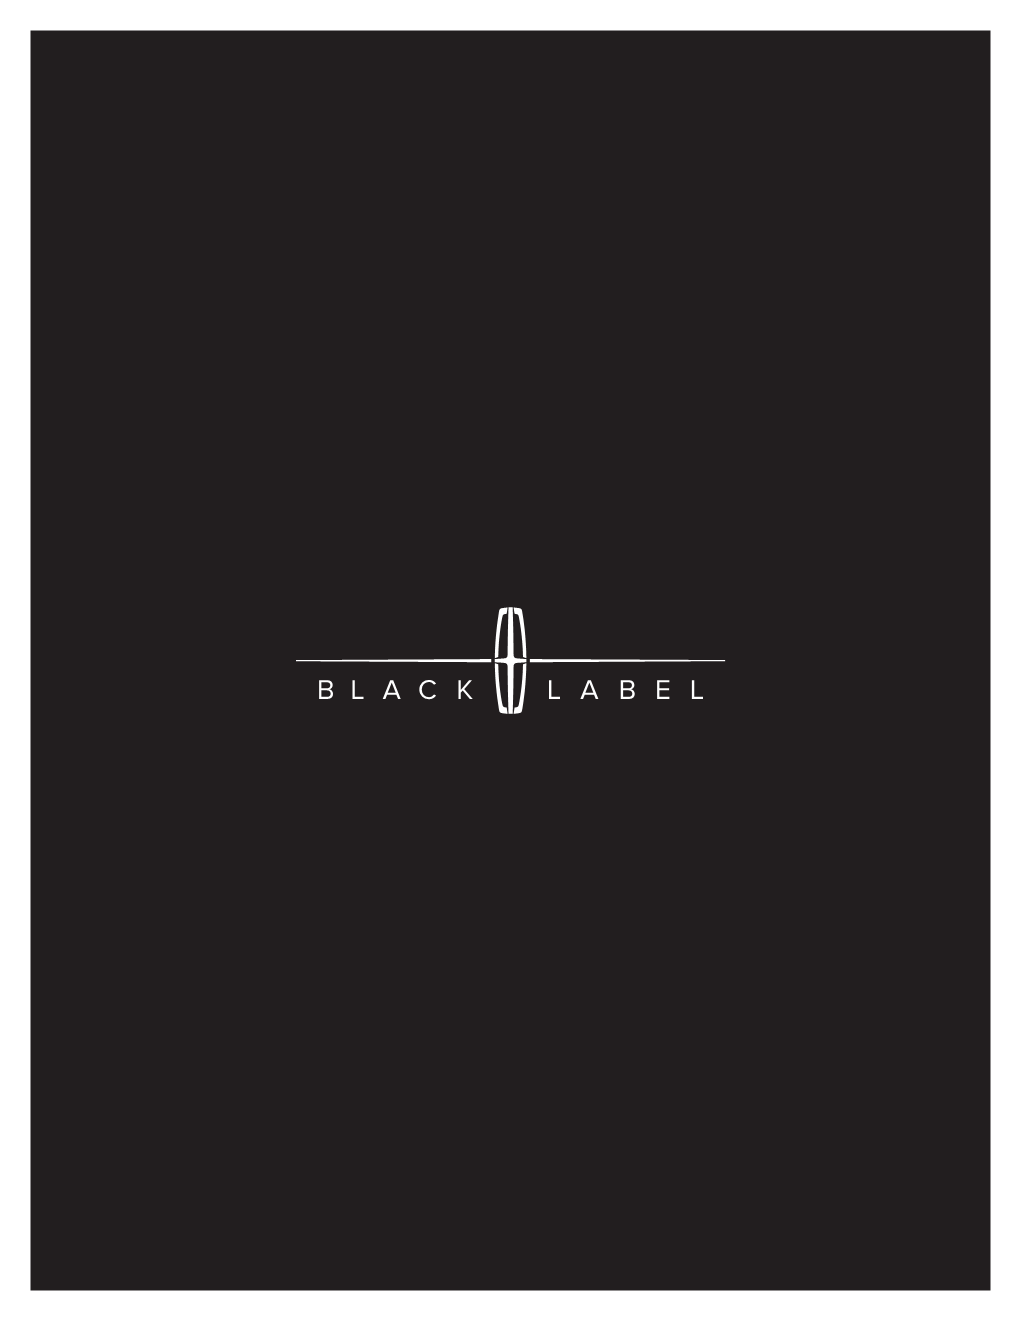 Lincol Black Label | 2016 Member Privileges | Lincoln.Com